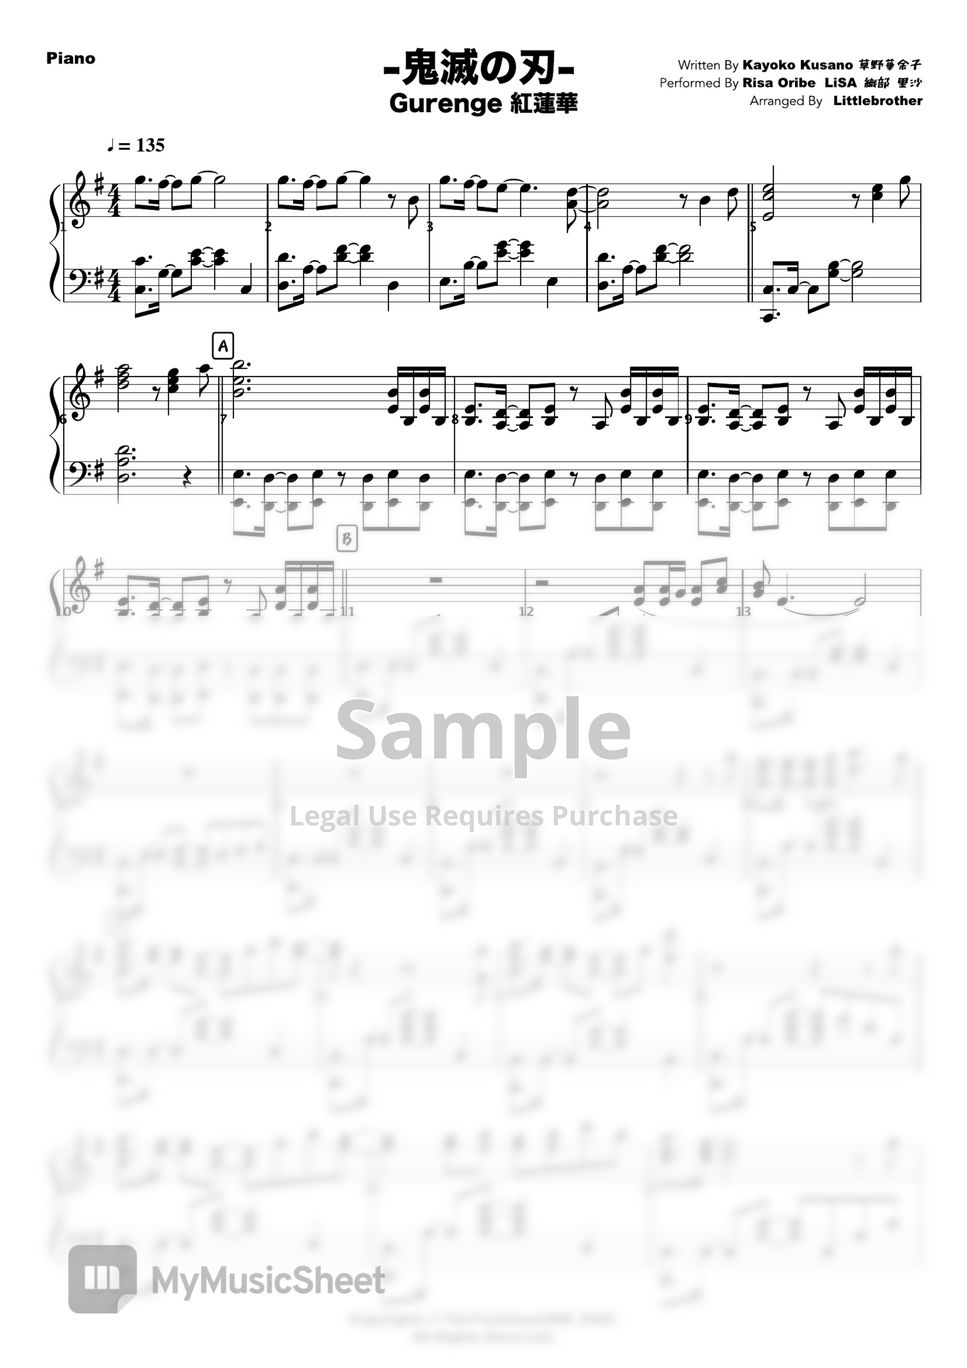 LiSA - 紅蓮華 Gurenge (Piano) by Littlebrother